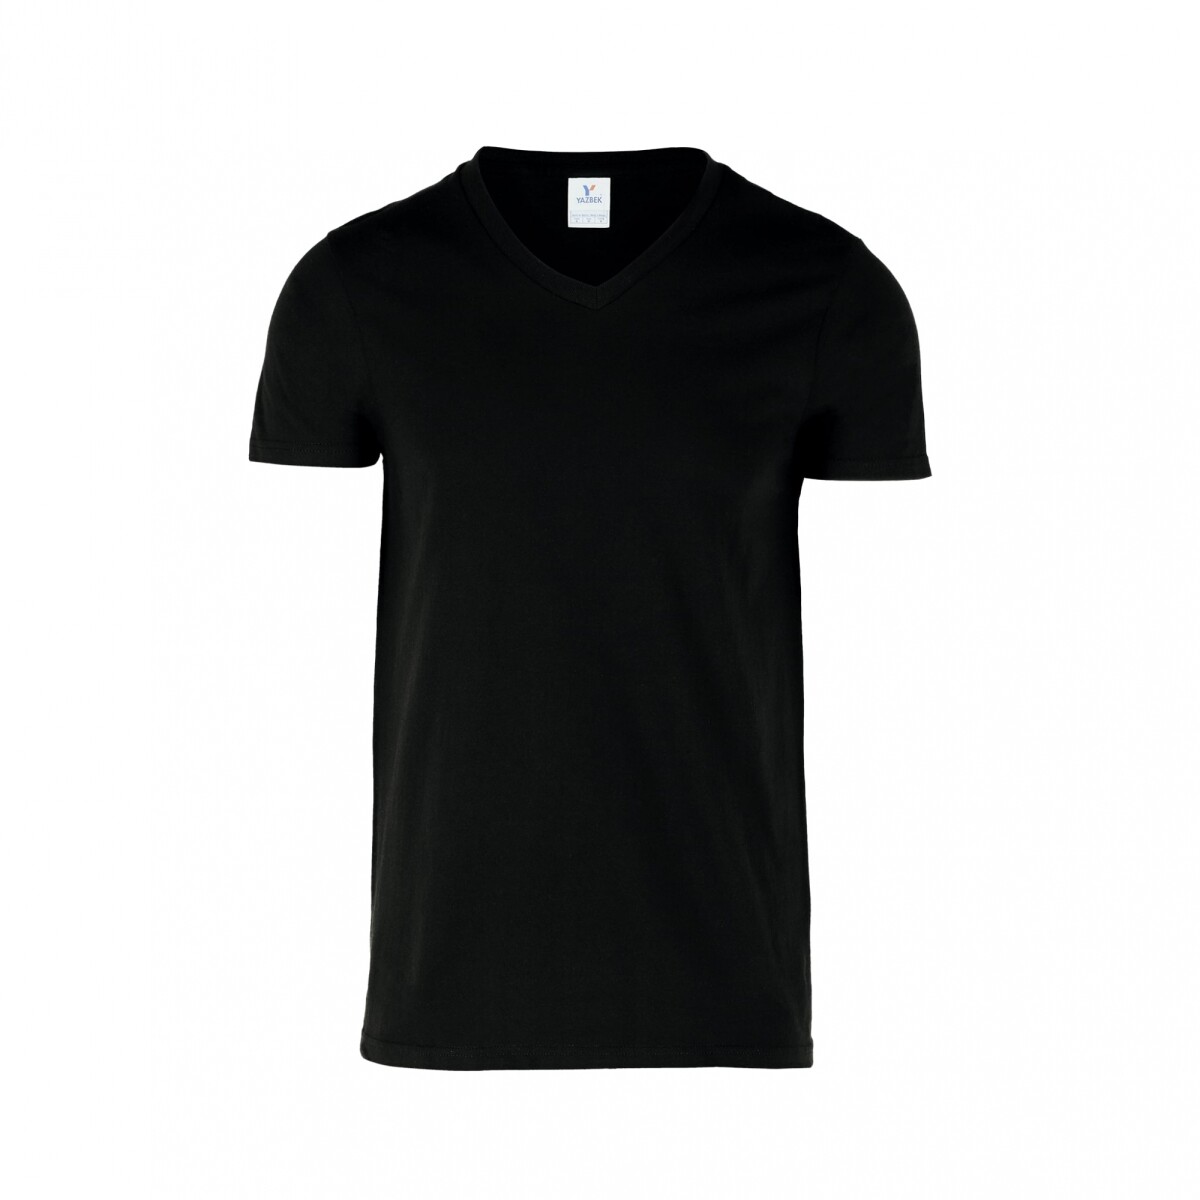 Camiseta escote en v - Negro 